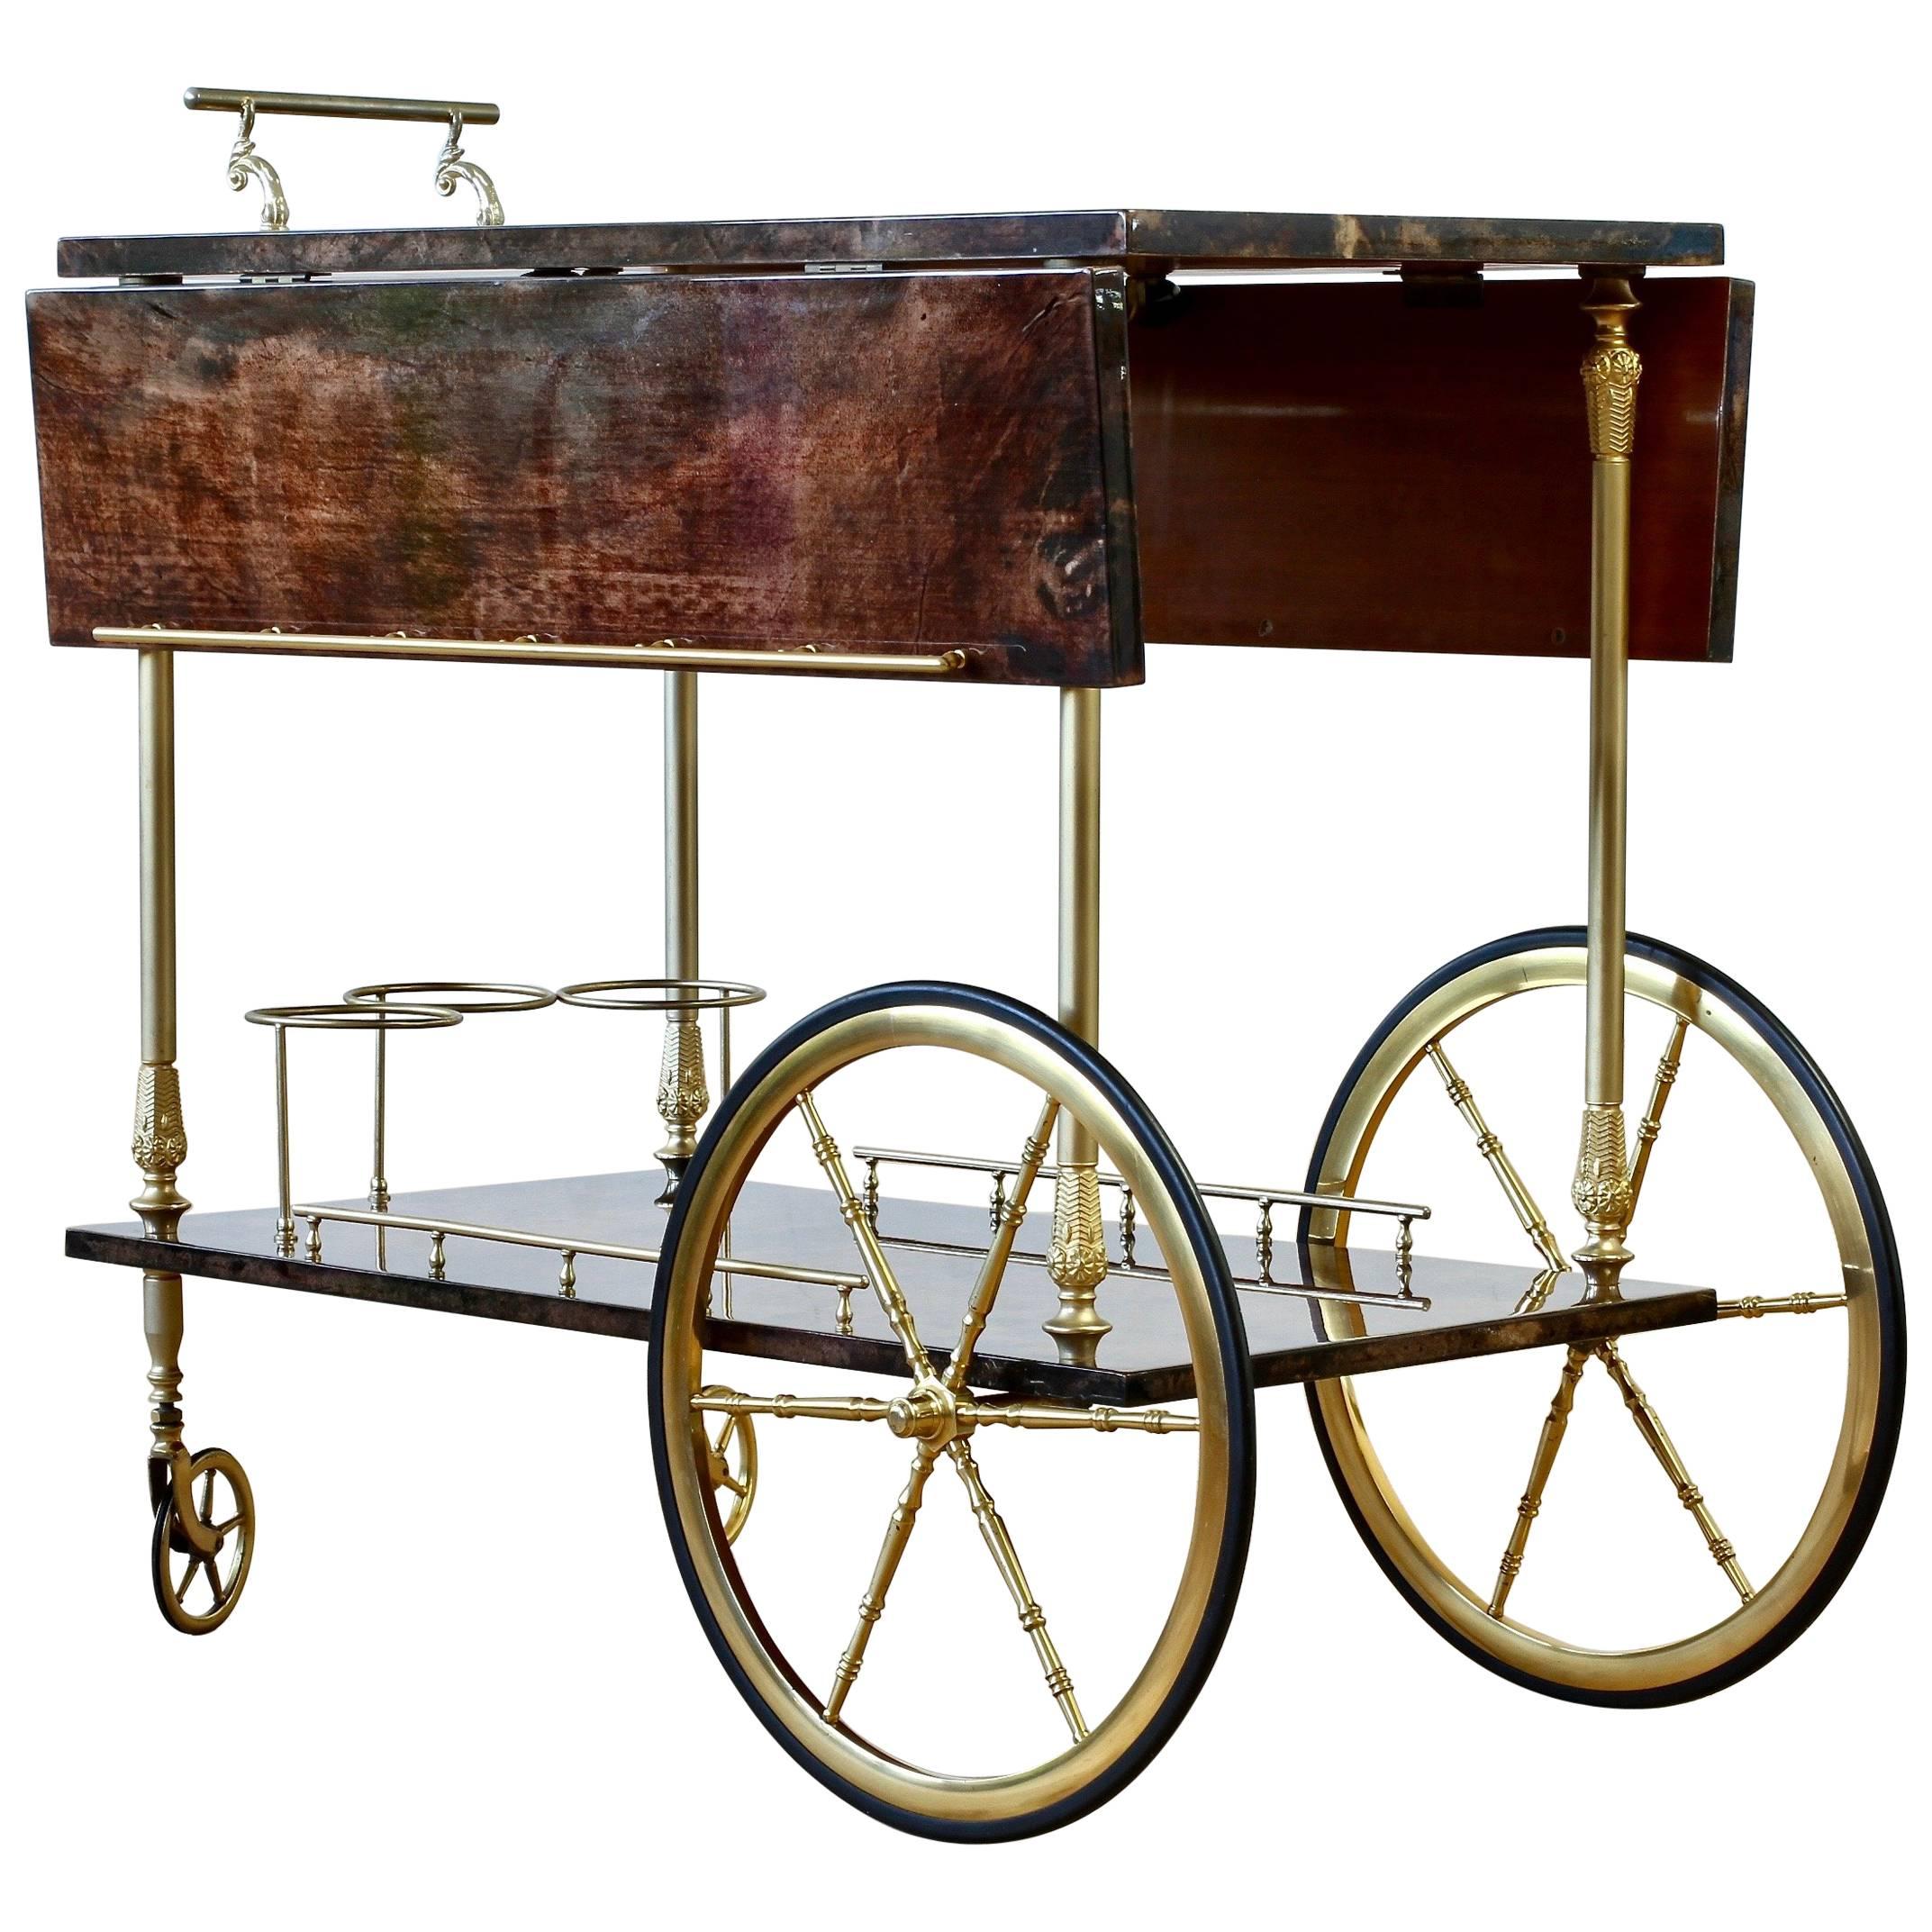 Aldo Tura 1950s Bar Cart, Tea Trolley or Drinks Stand in Brown Italian Leather